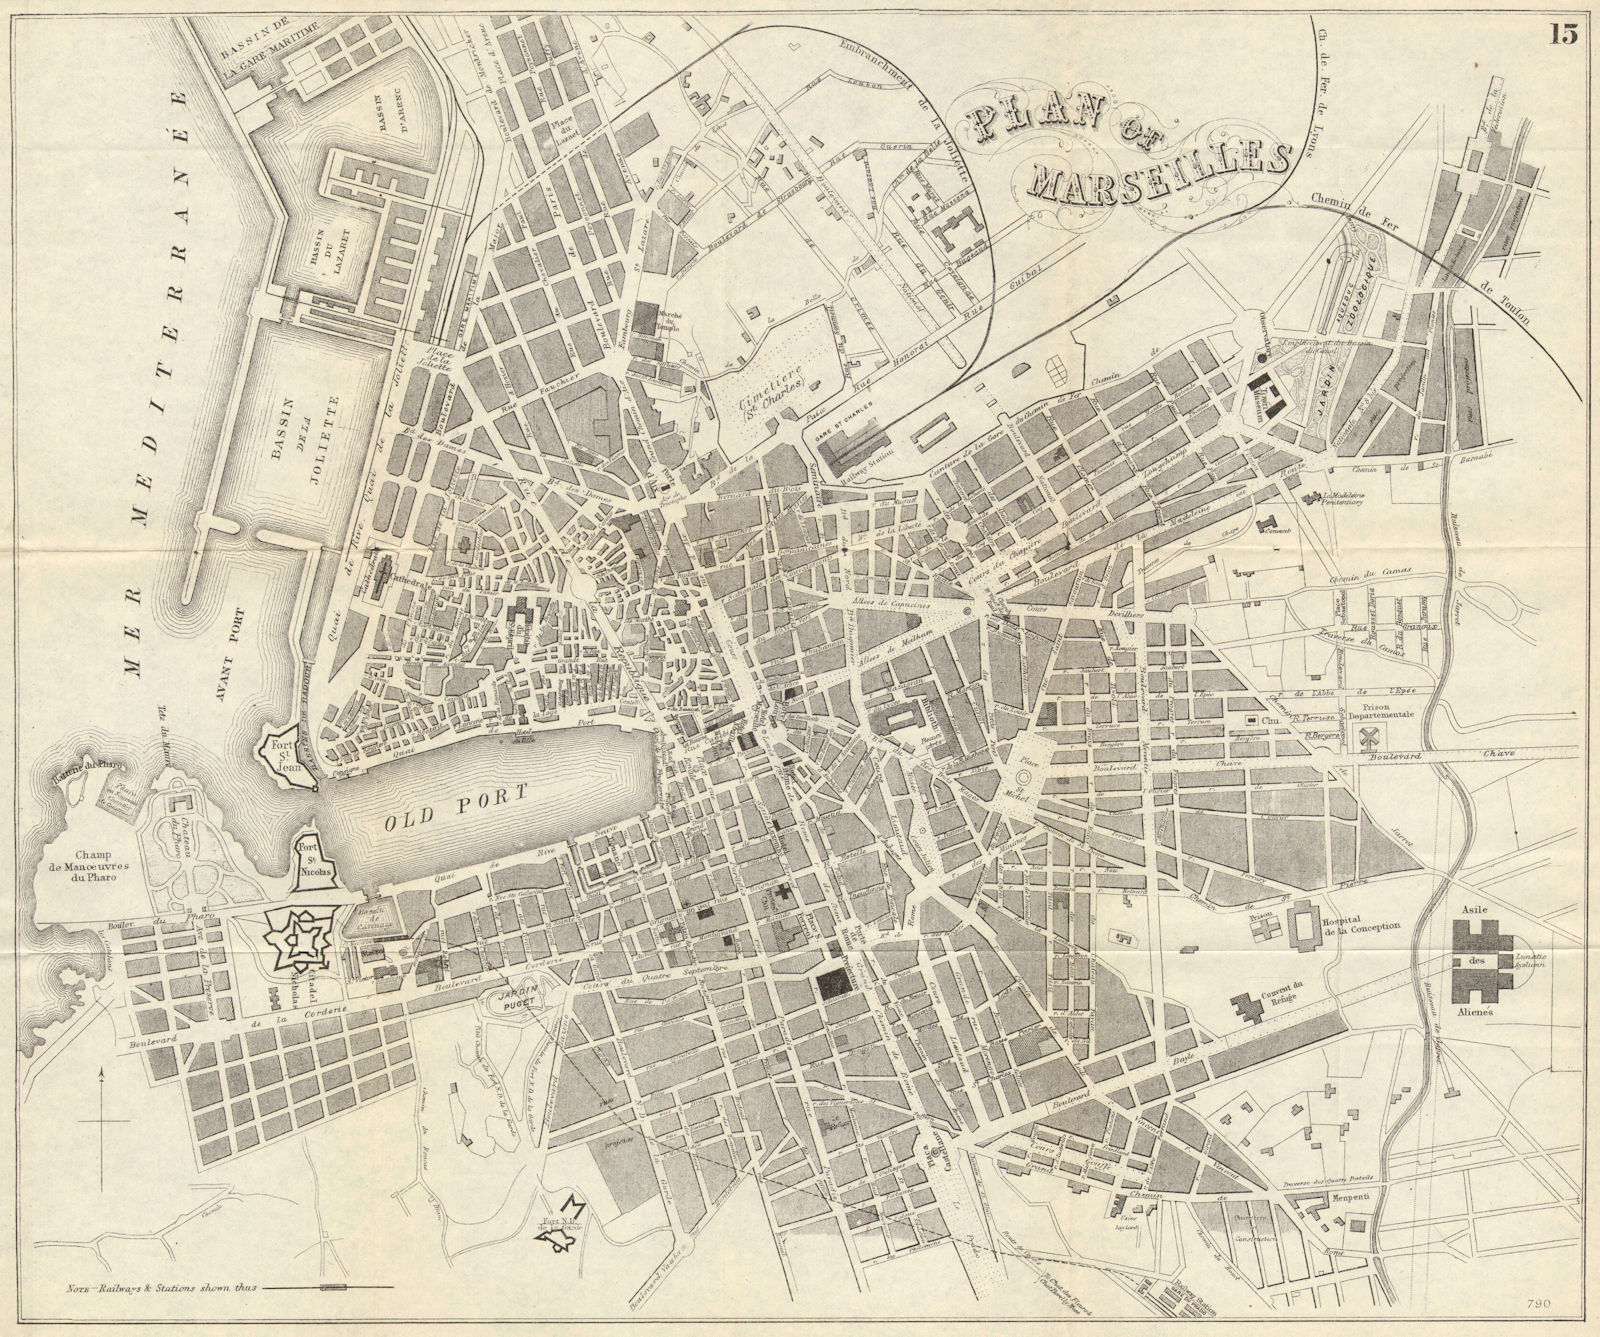 Associate Product MARSEILLES. Antique town plan. City map. France. BRADSHAW 1890 old